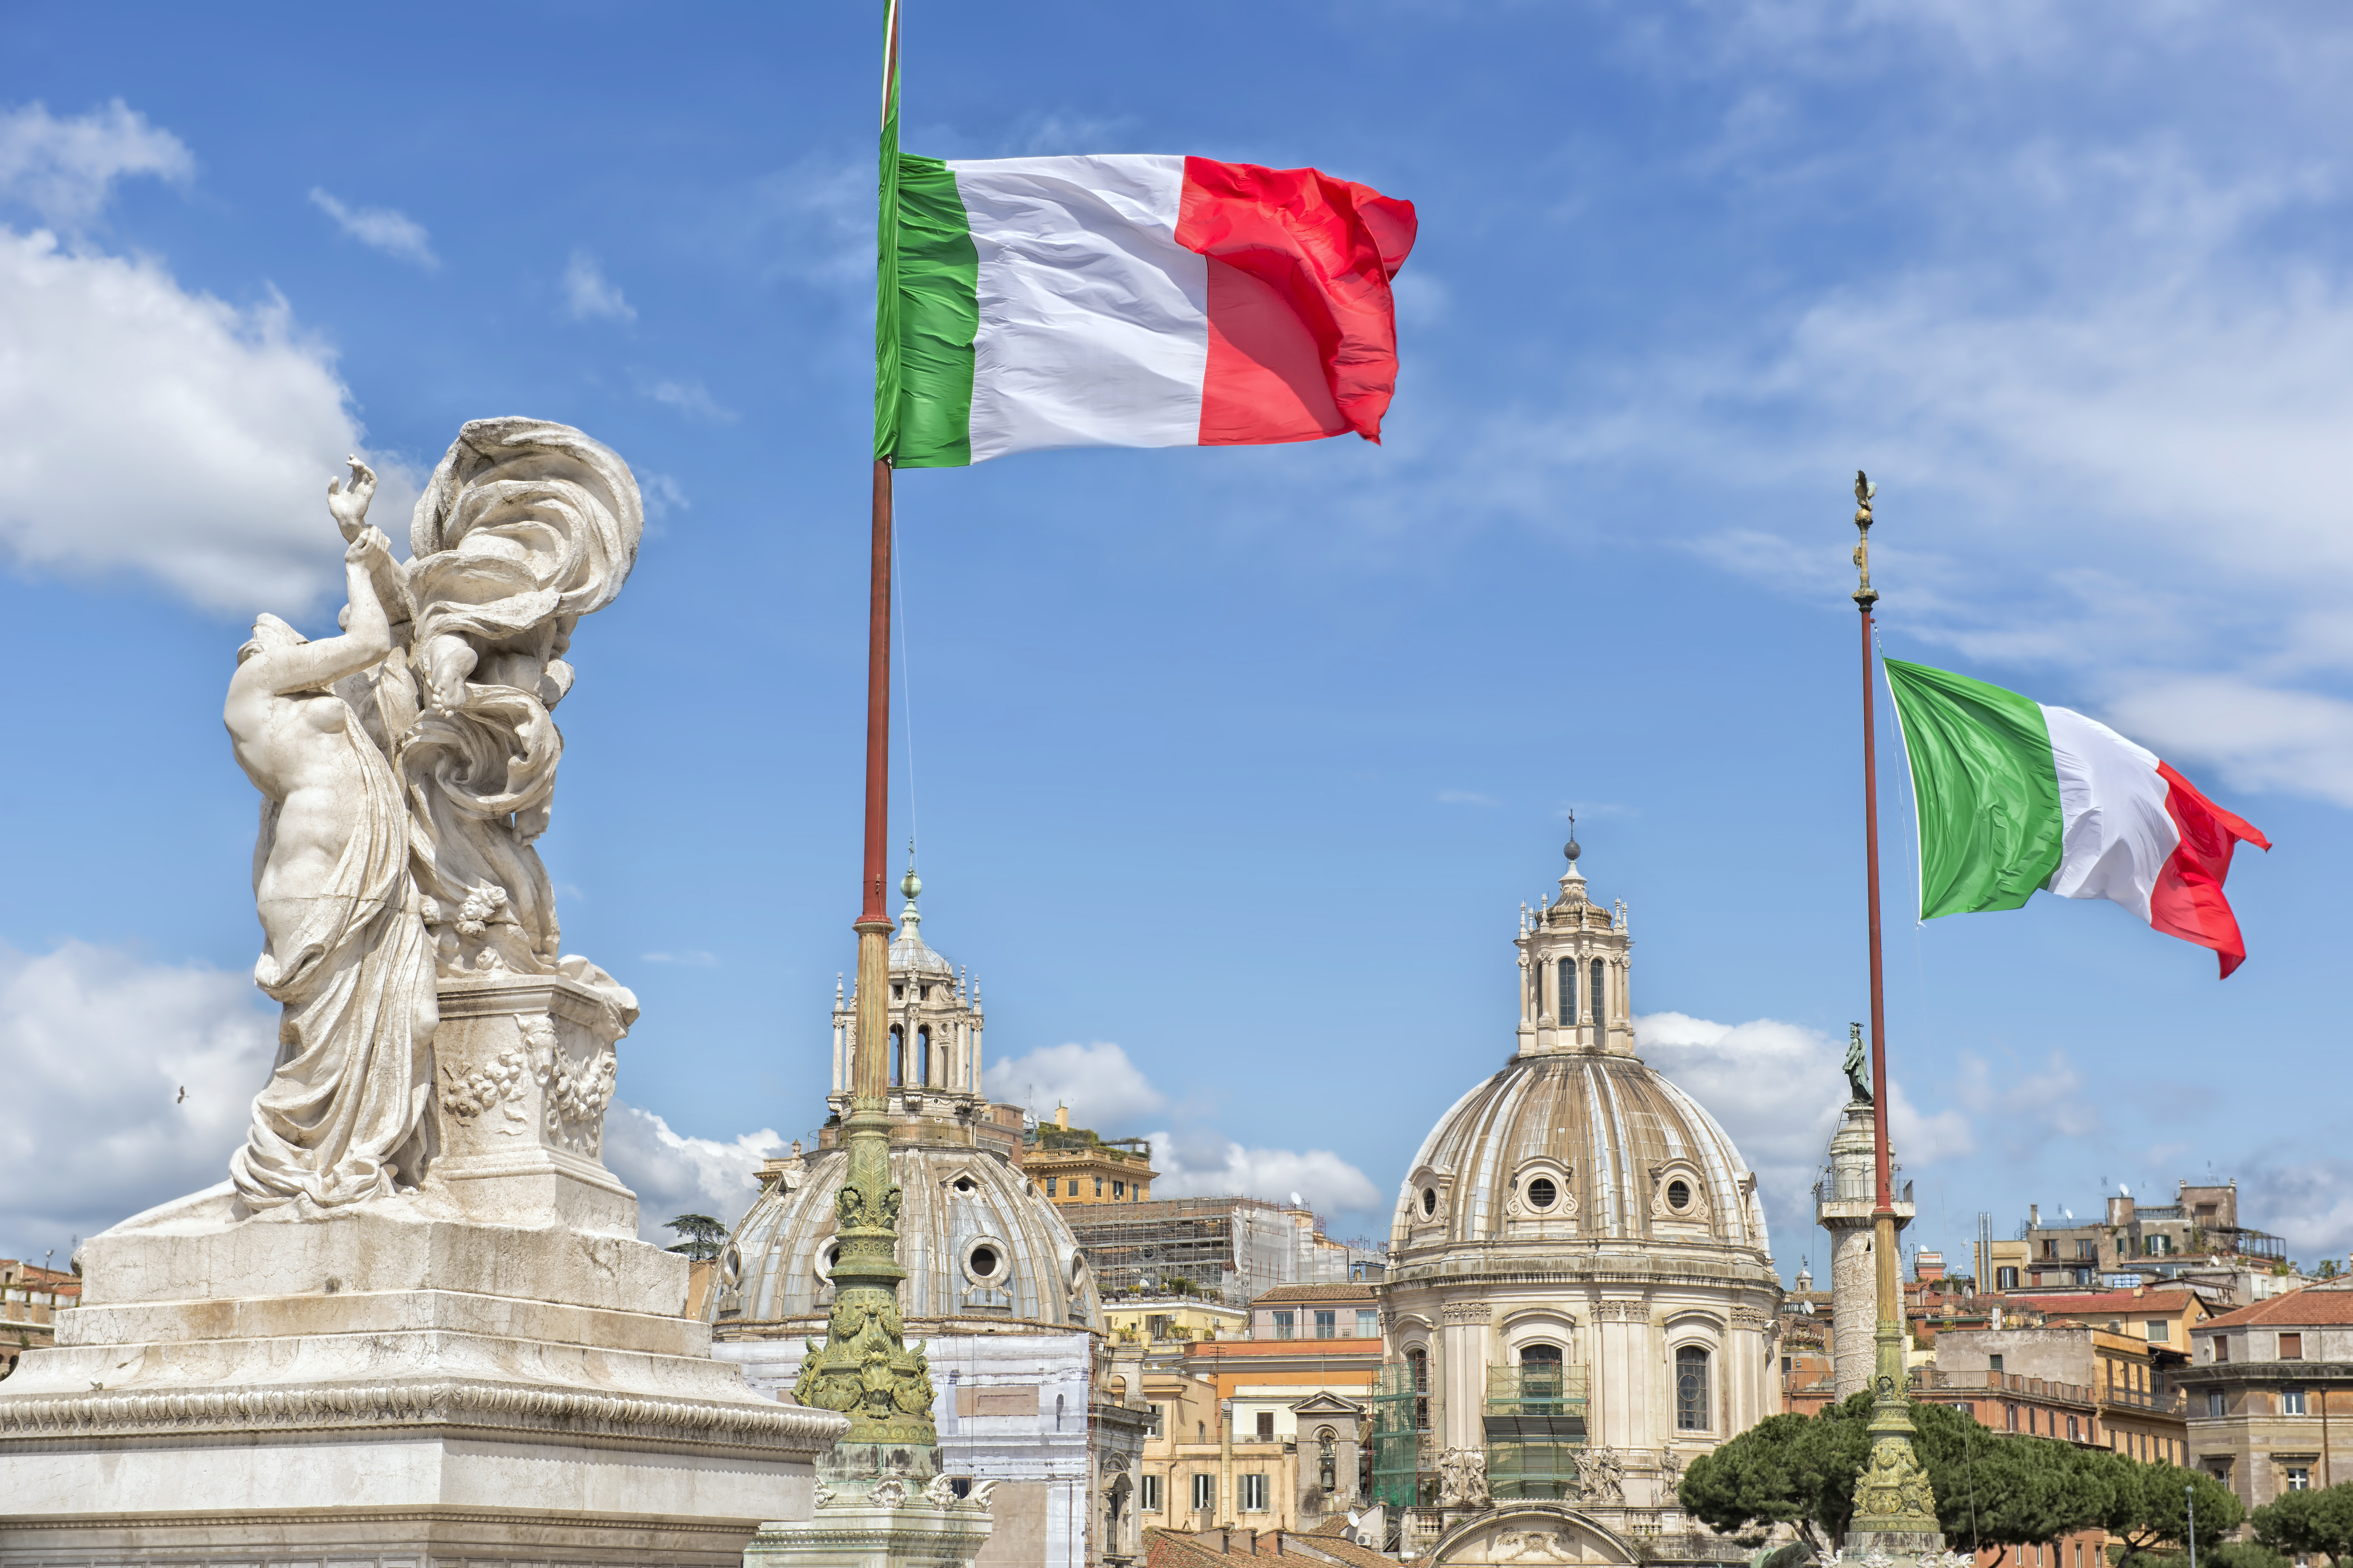 The flag symbolizes Italian citizenship